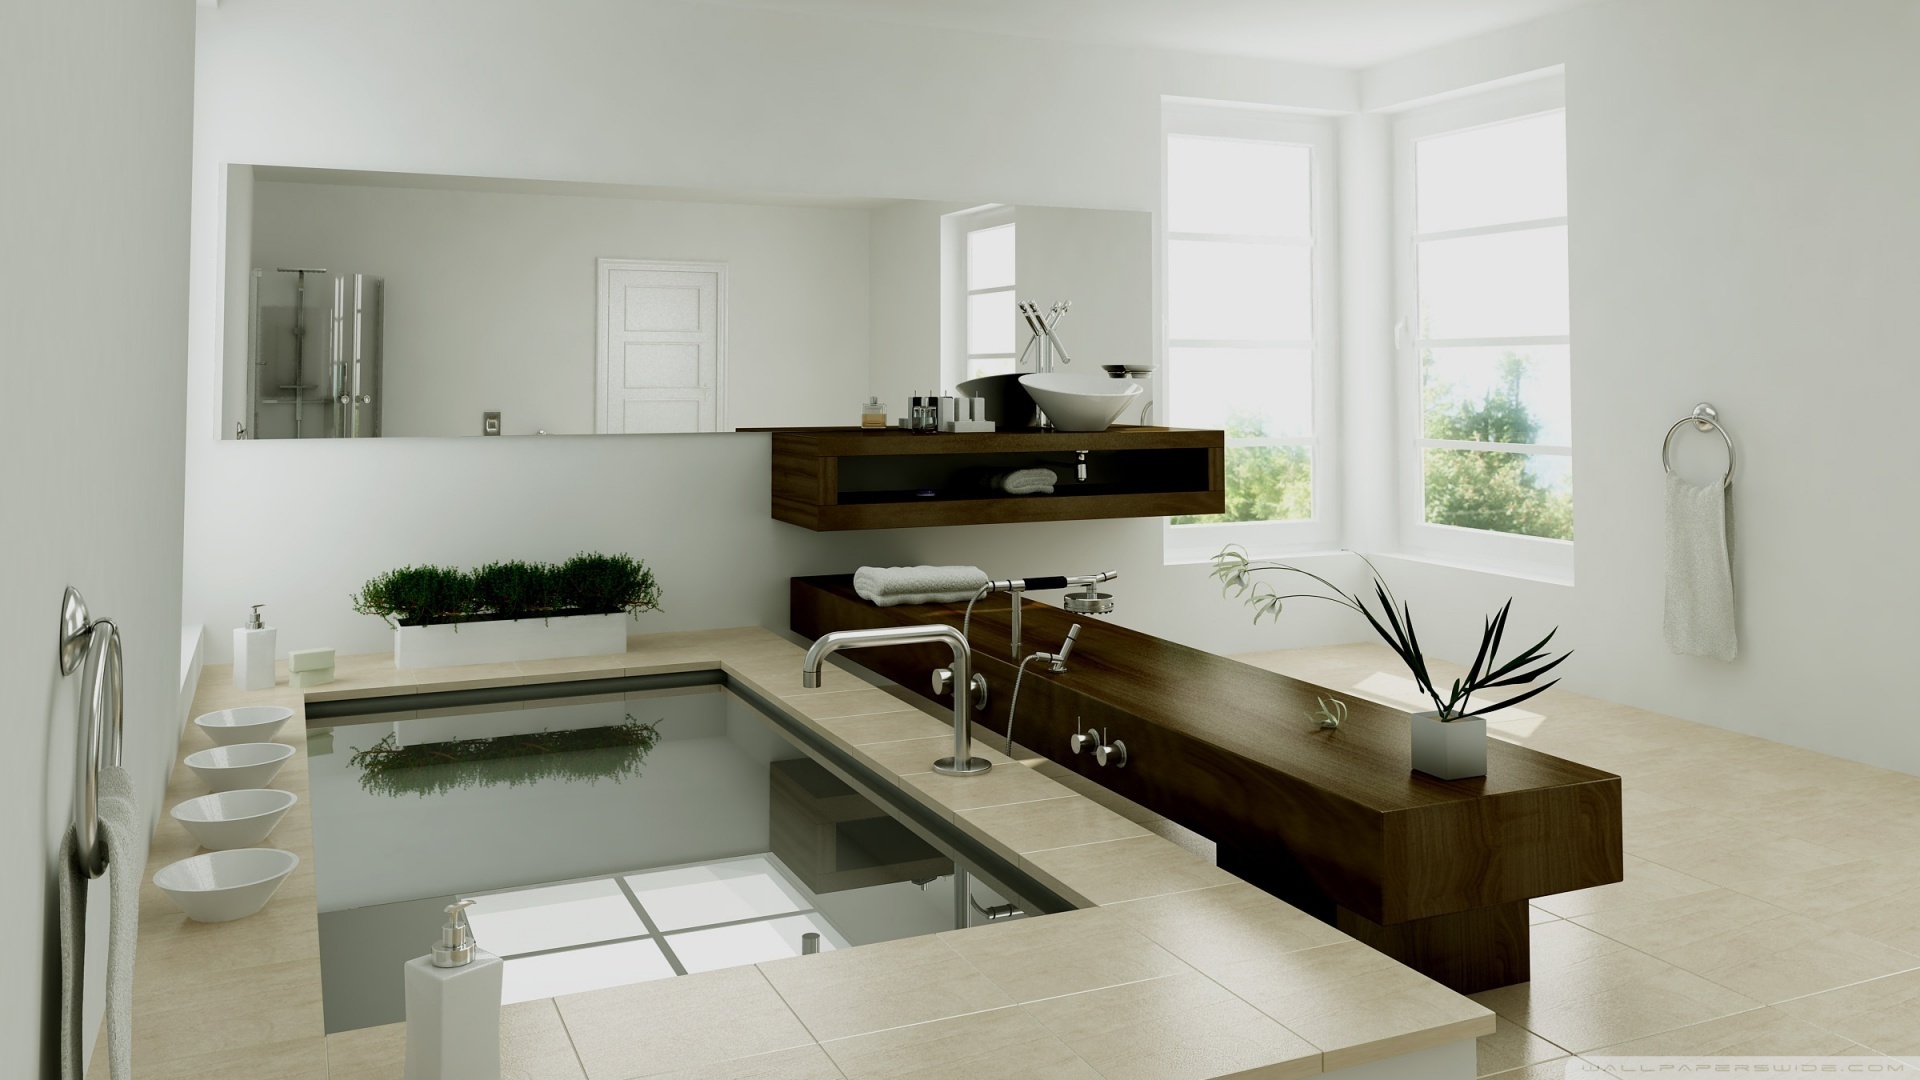 Design Ideas Luxury Bathrooms - 1920x1080 Wallpaper 